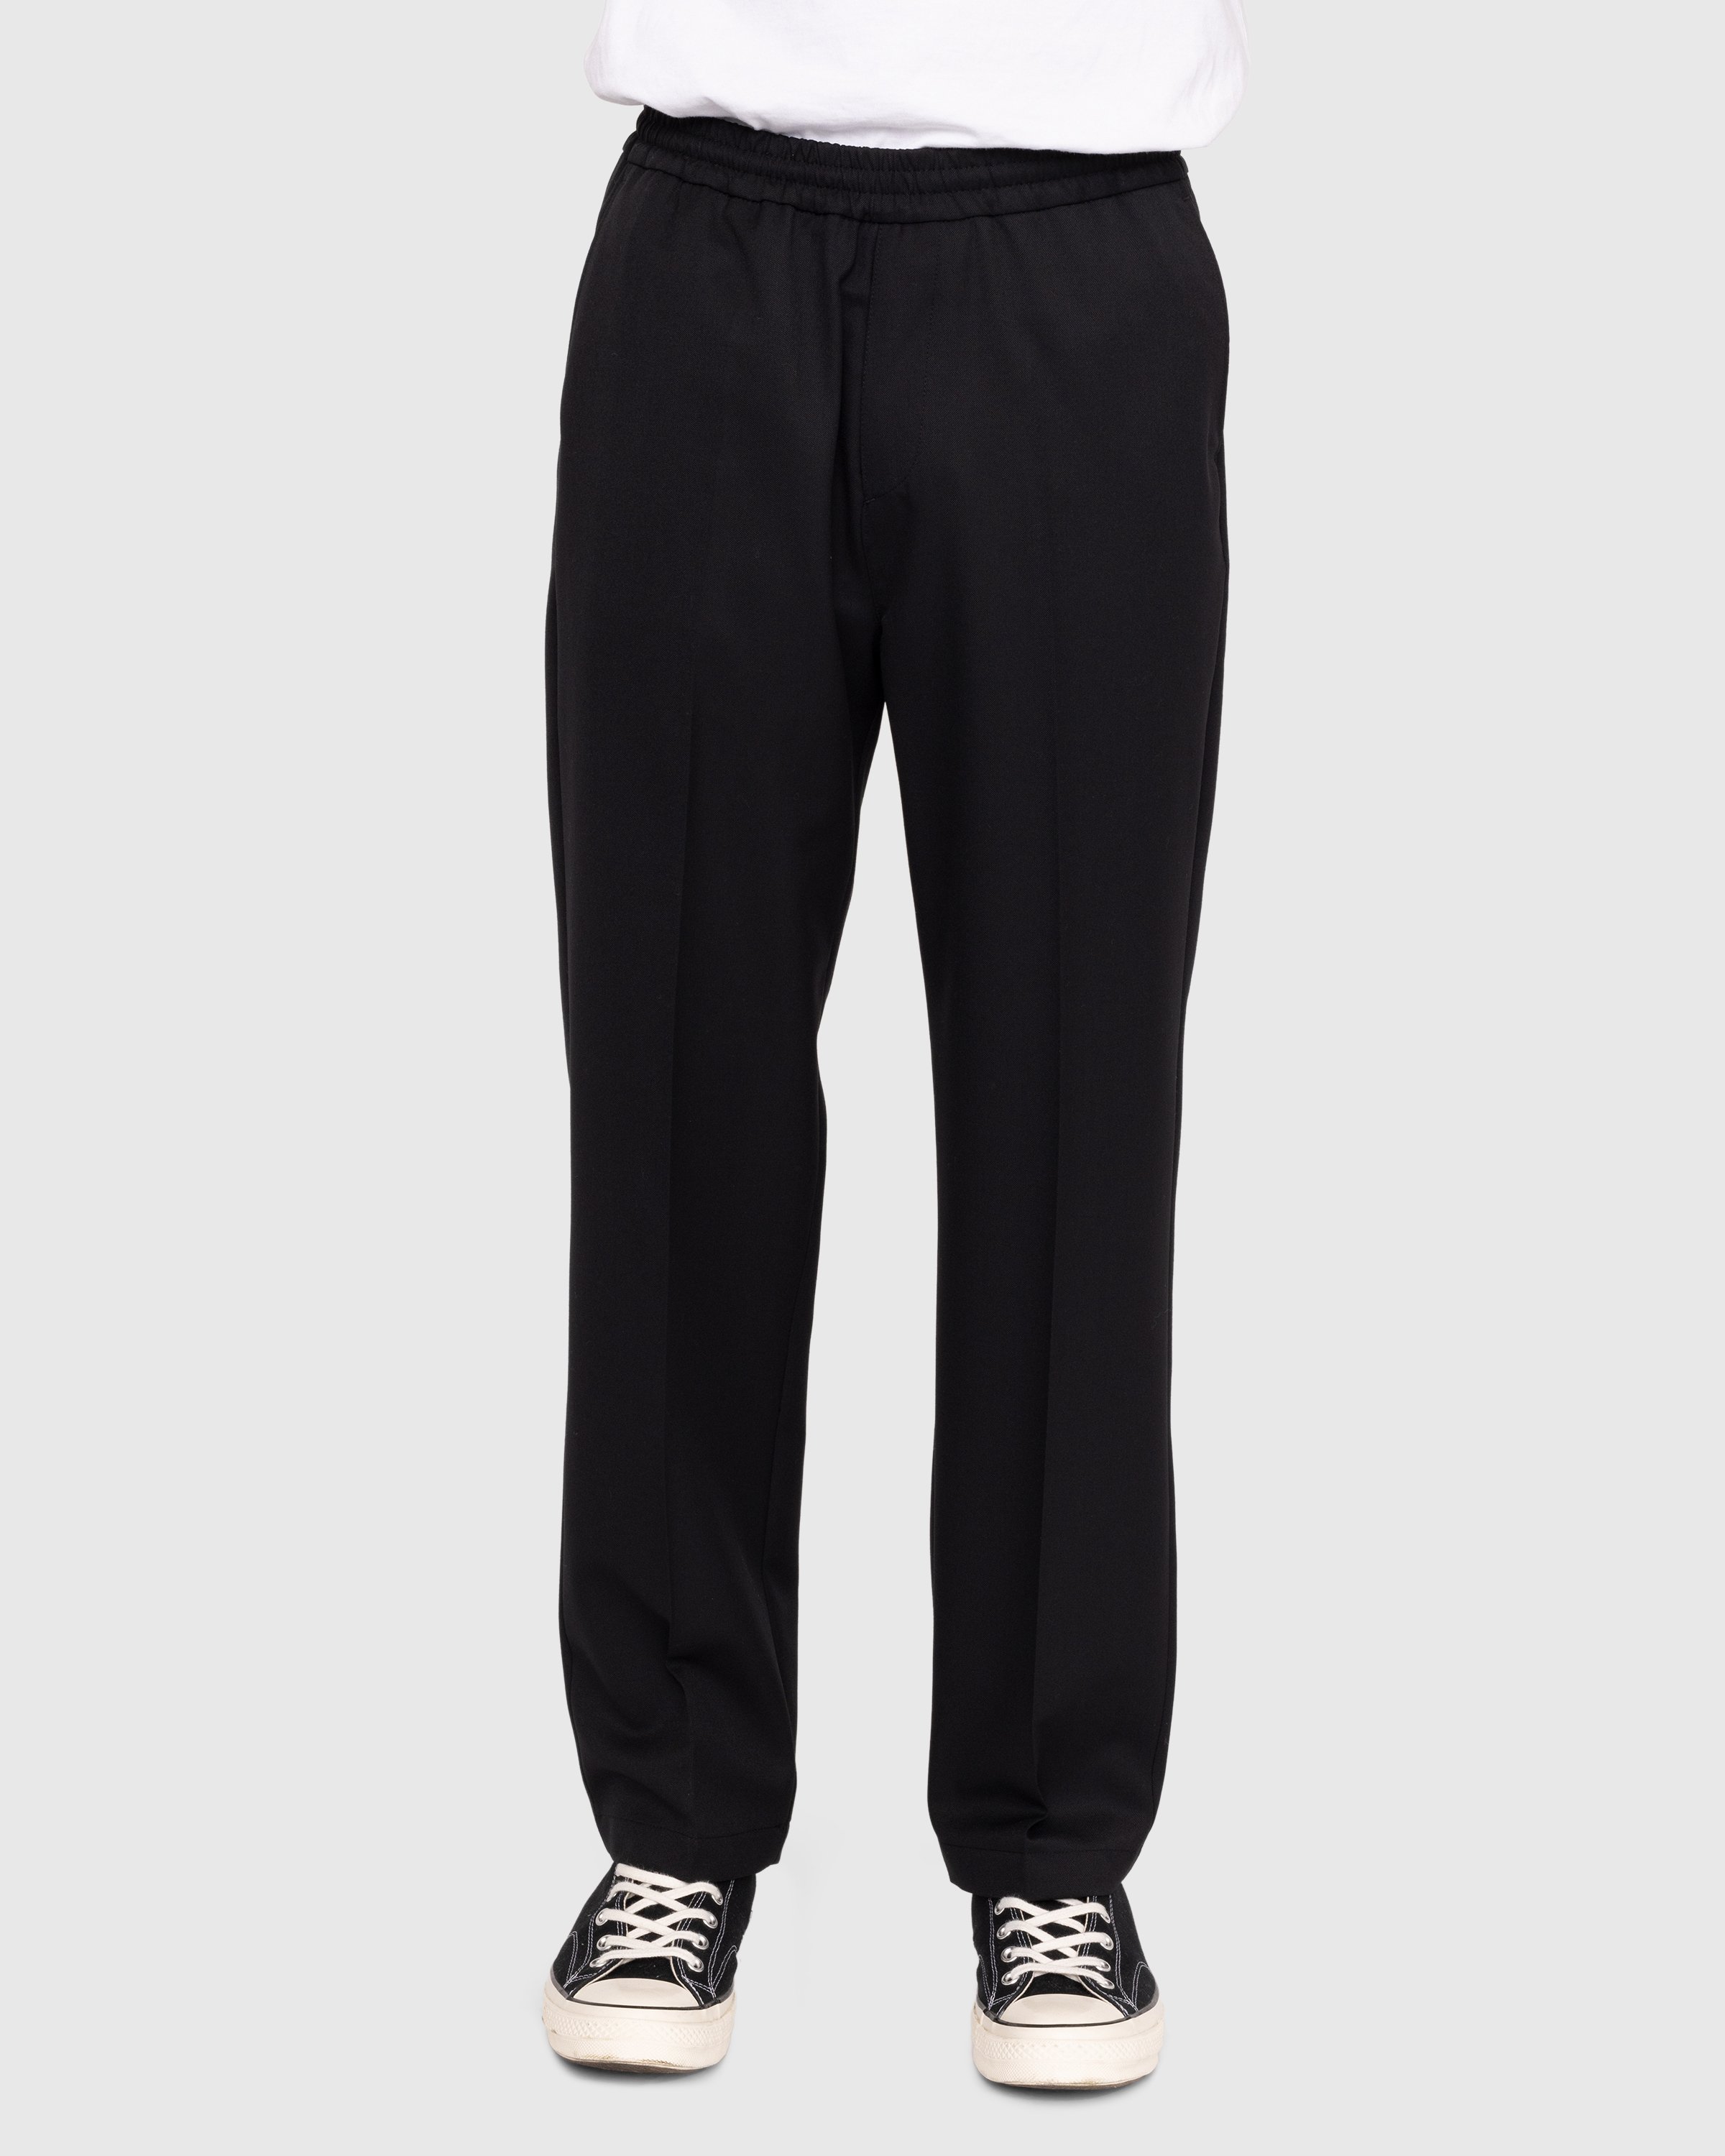 Highsnobiety - Wool Blend Elastic Pants Black - Clothing - Black - Image 2